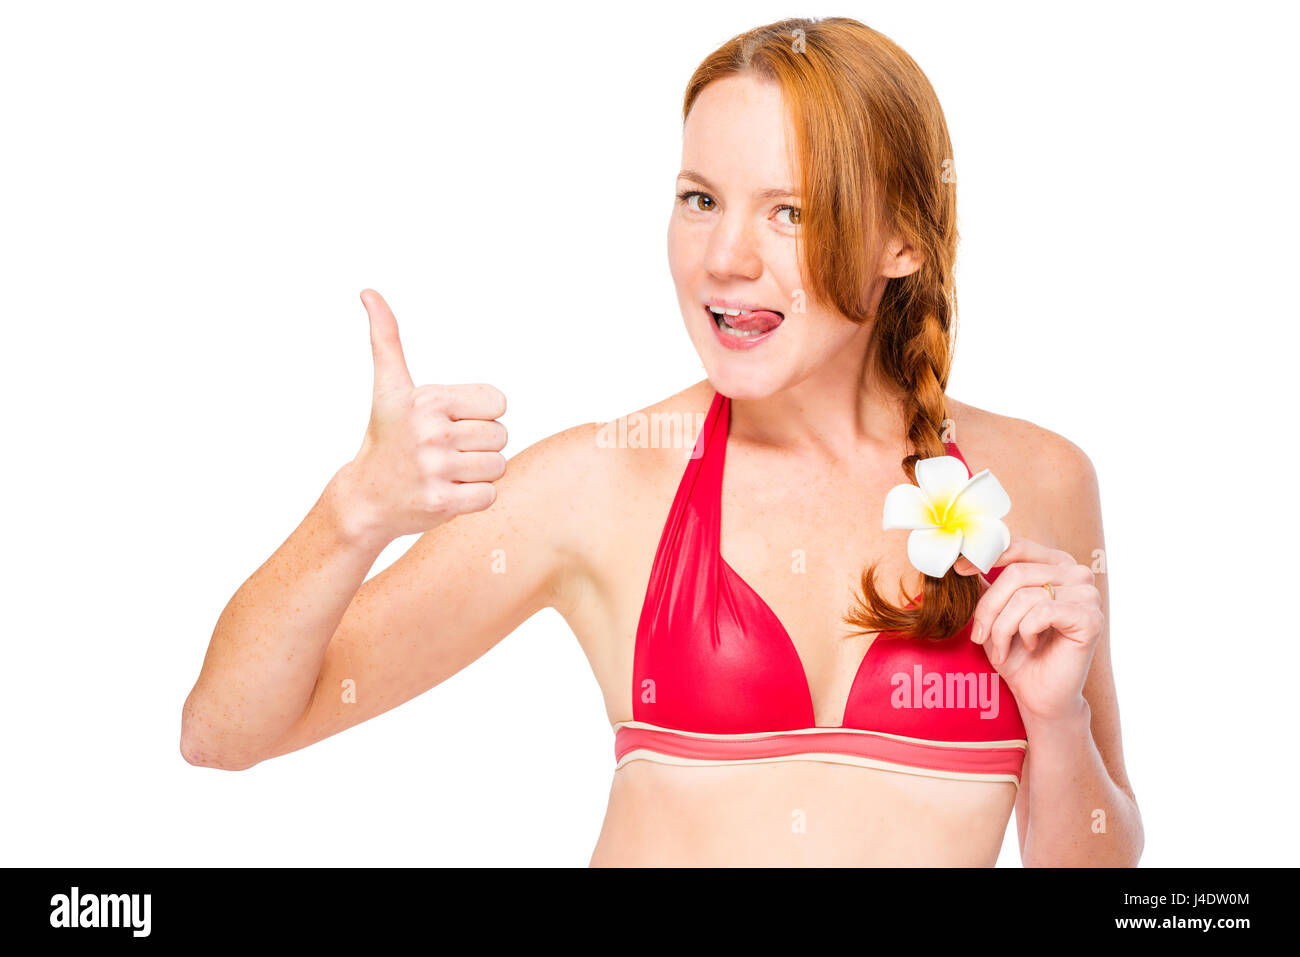 Funny girl in bikini with plumer in hair on white background posing Stock Photo